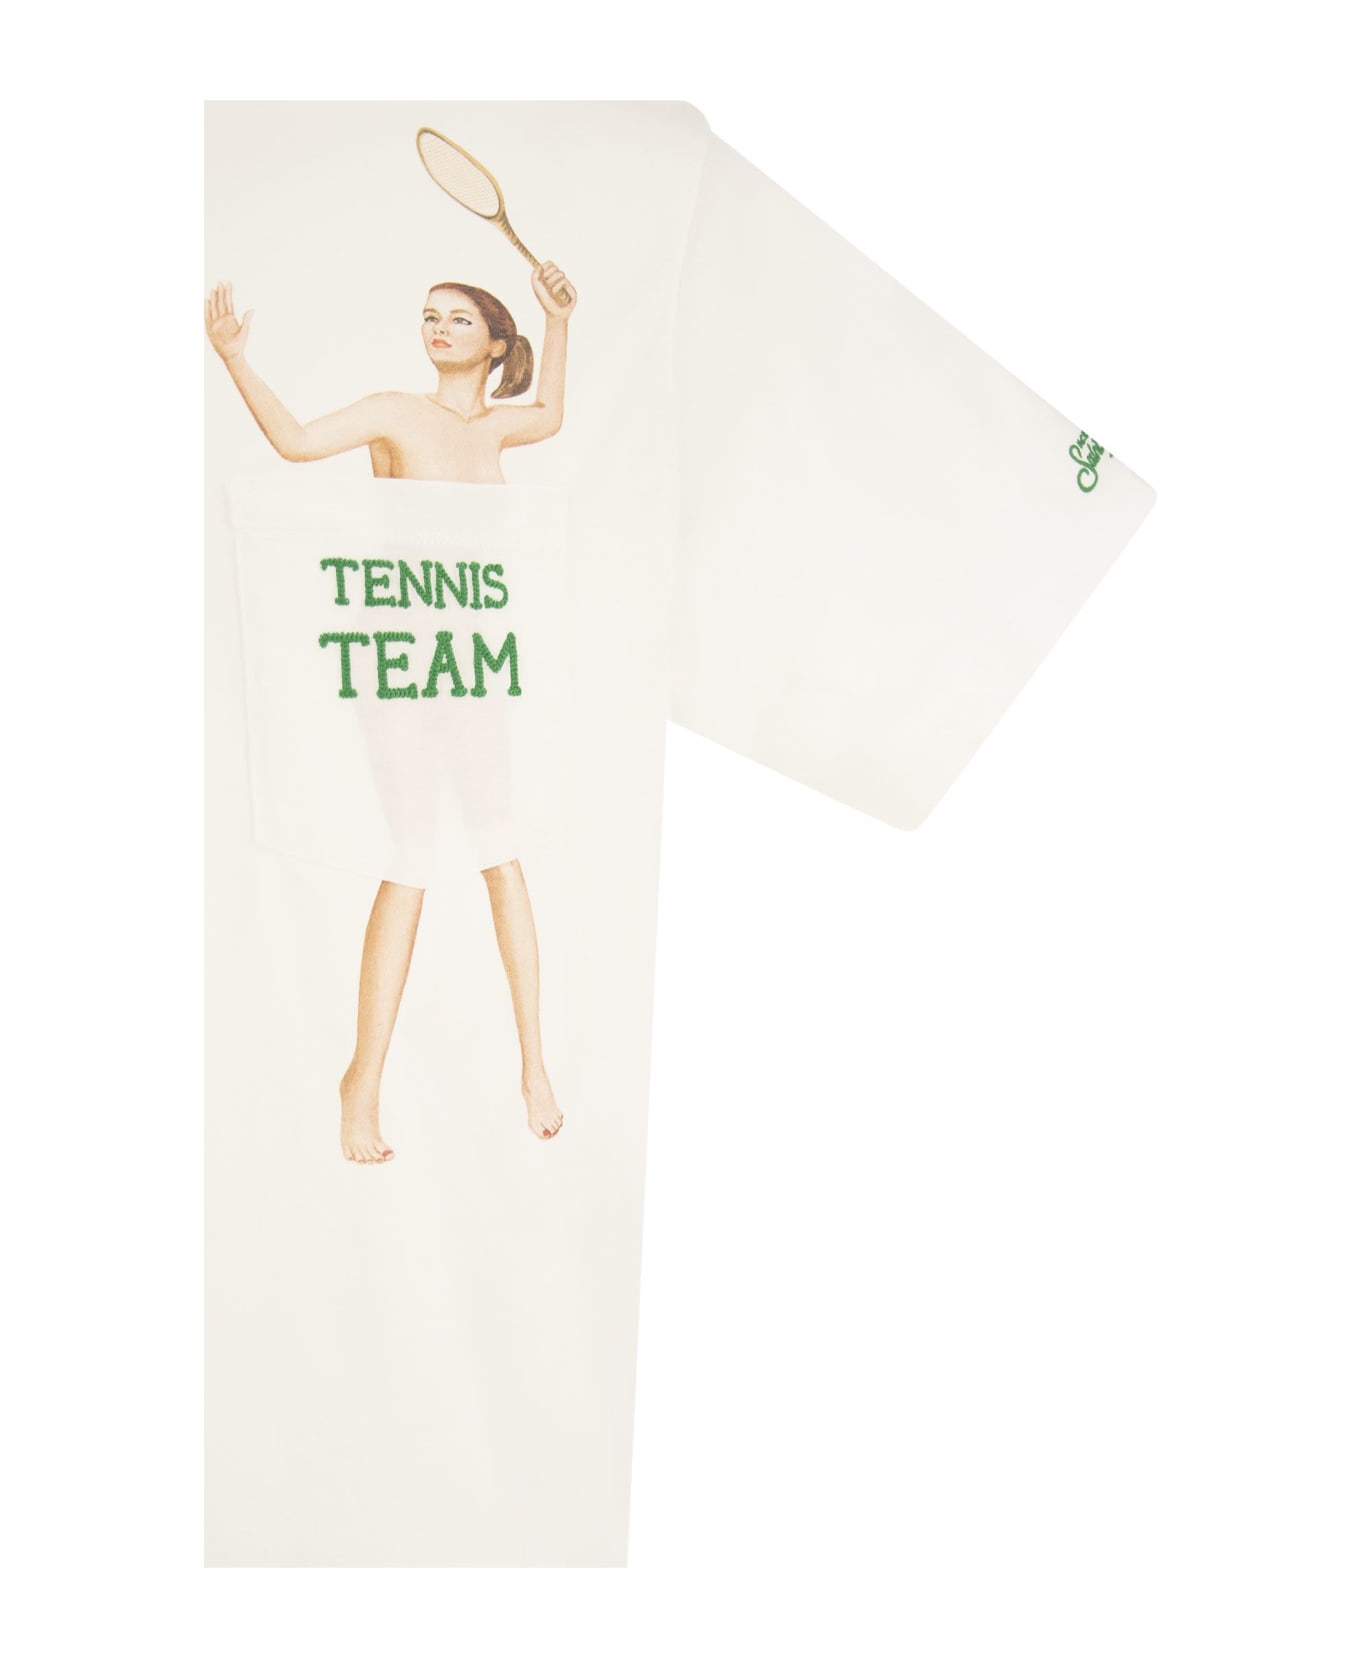 MC2 Saint Barth Tennis Team T-shirt With Embroidery On Pocket - White